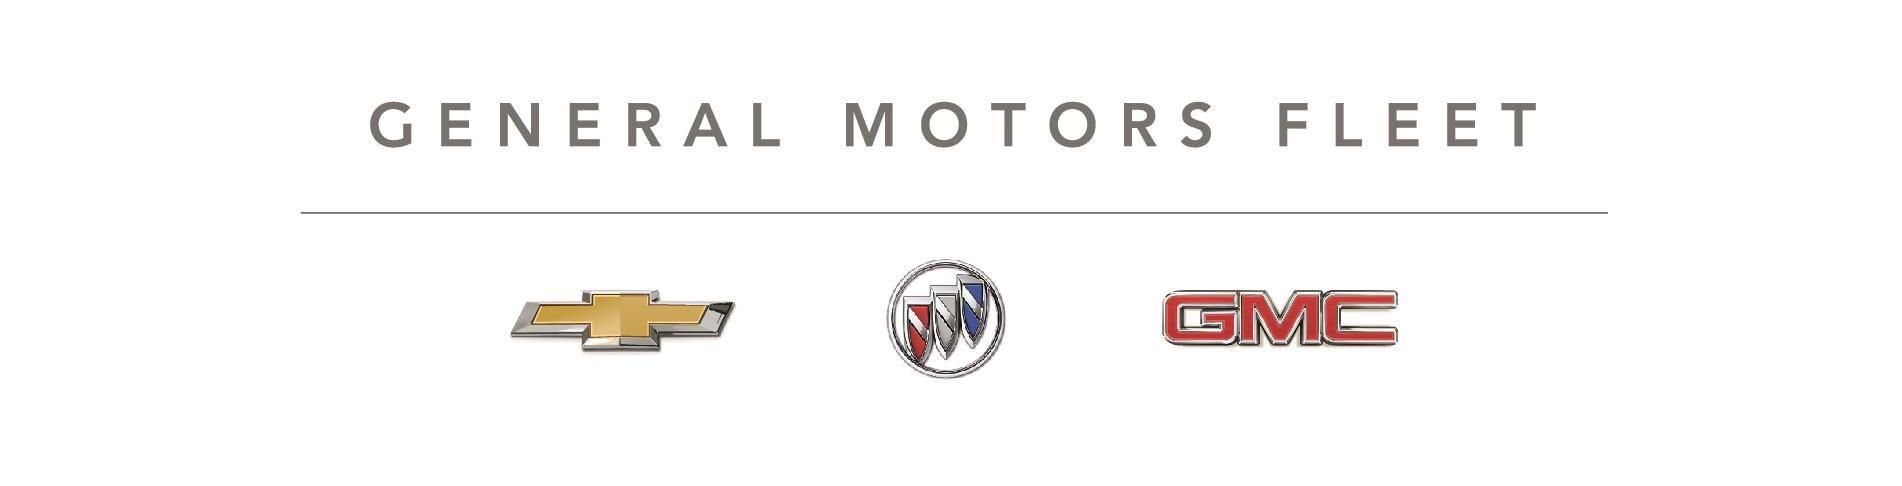 New General Motors Logo - General Motors Discount